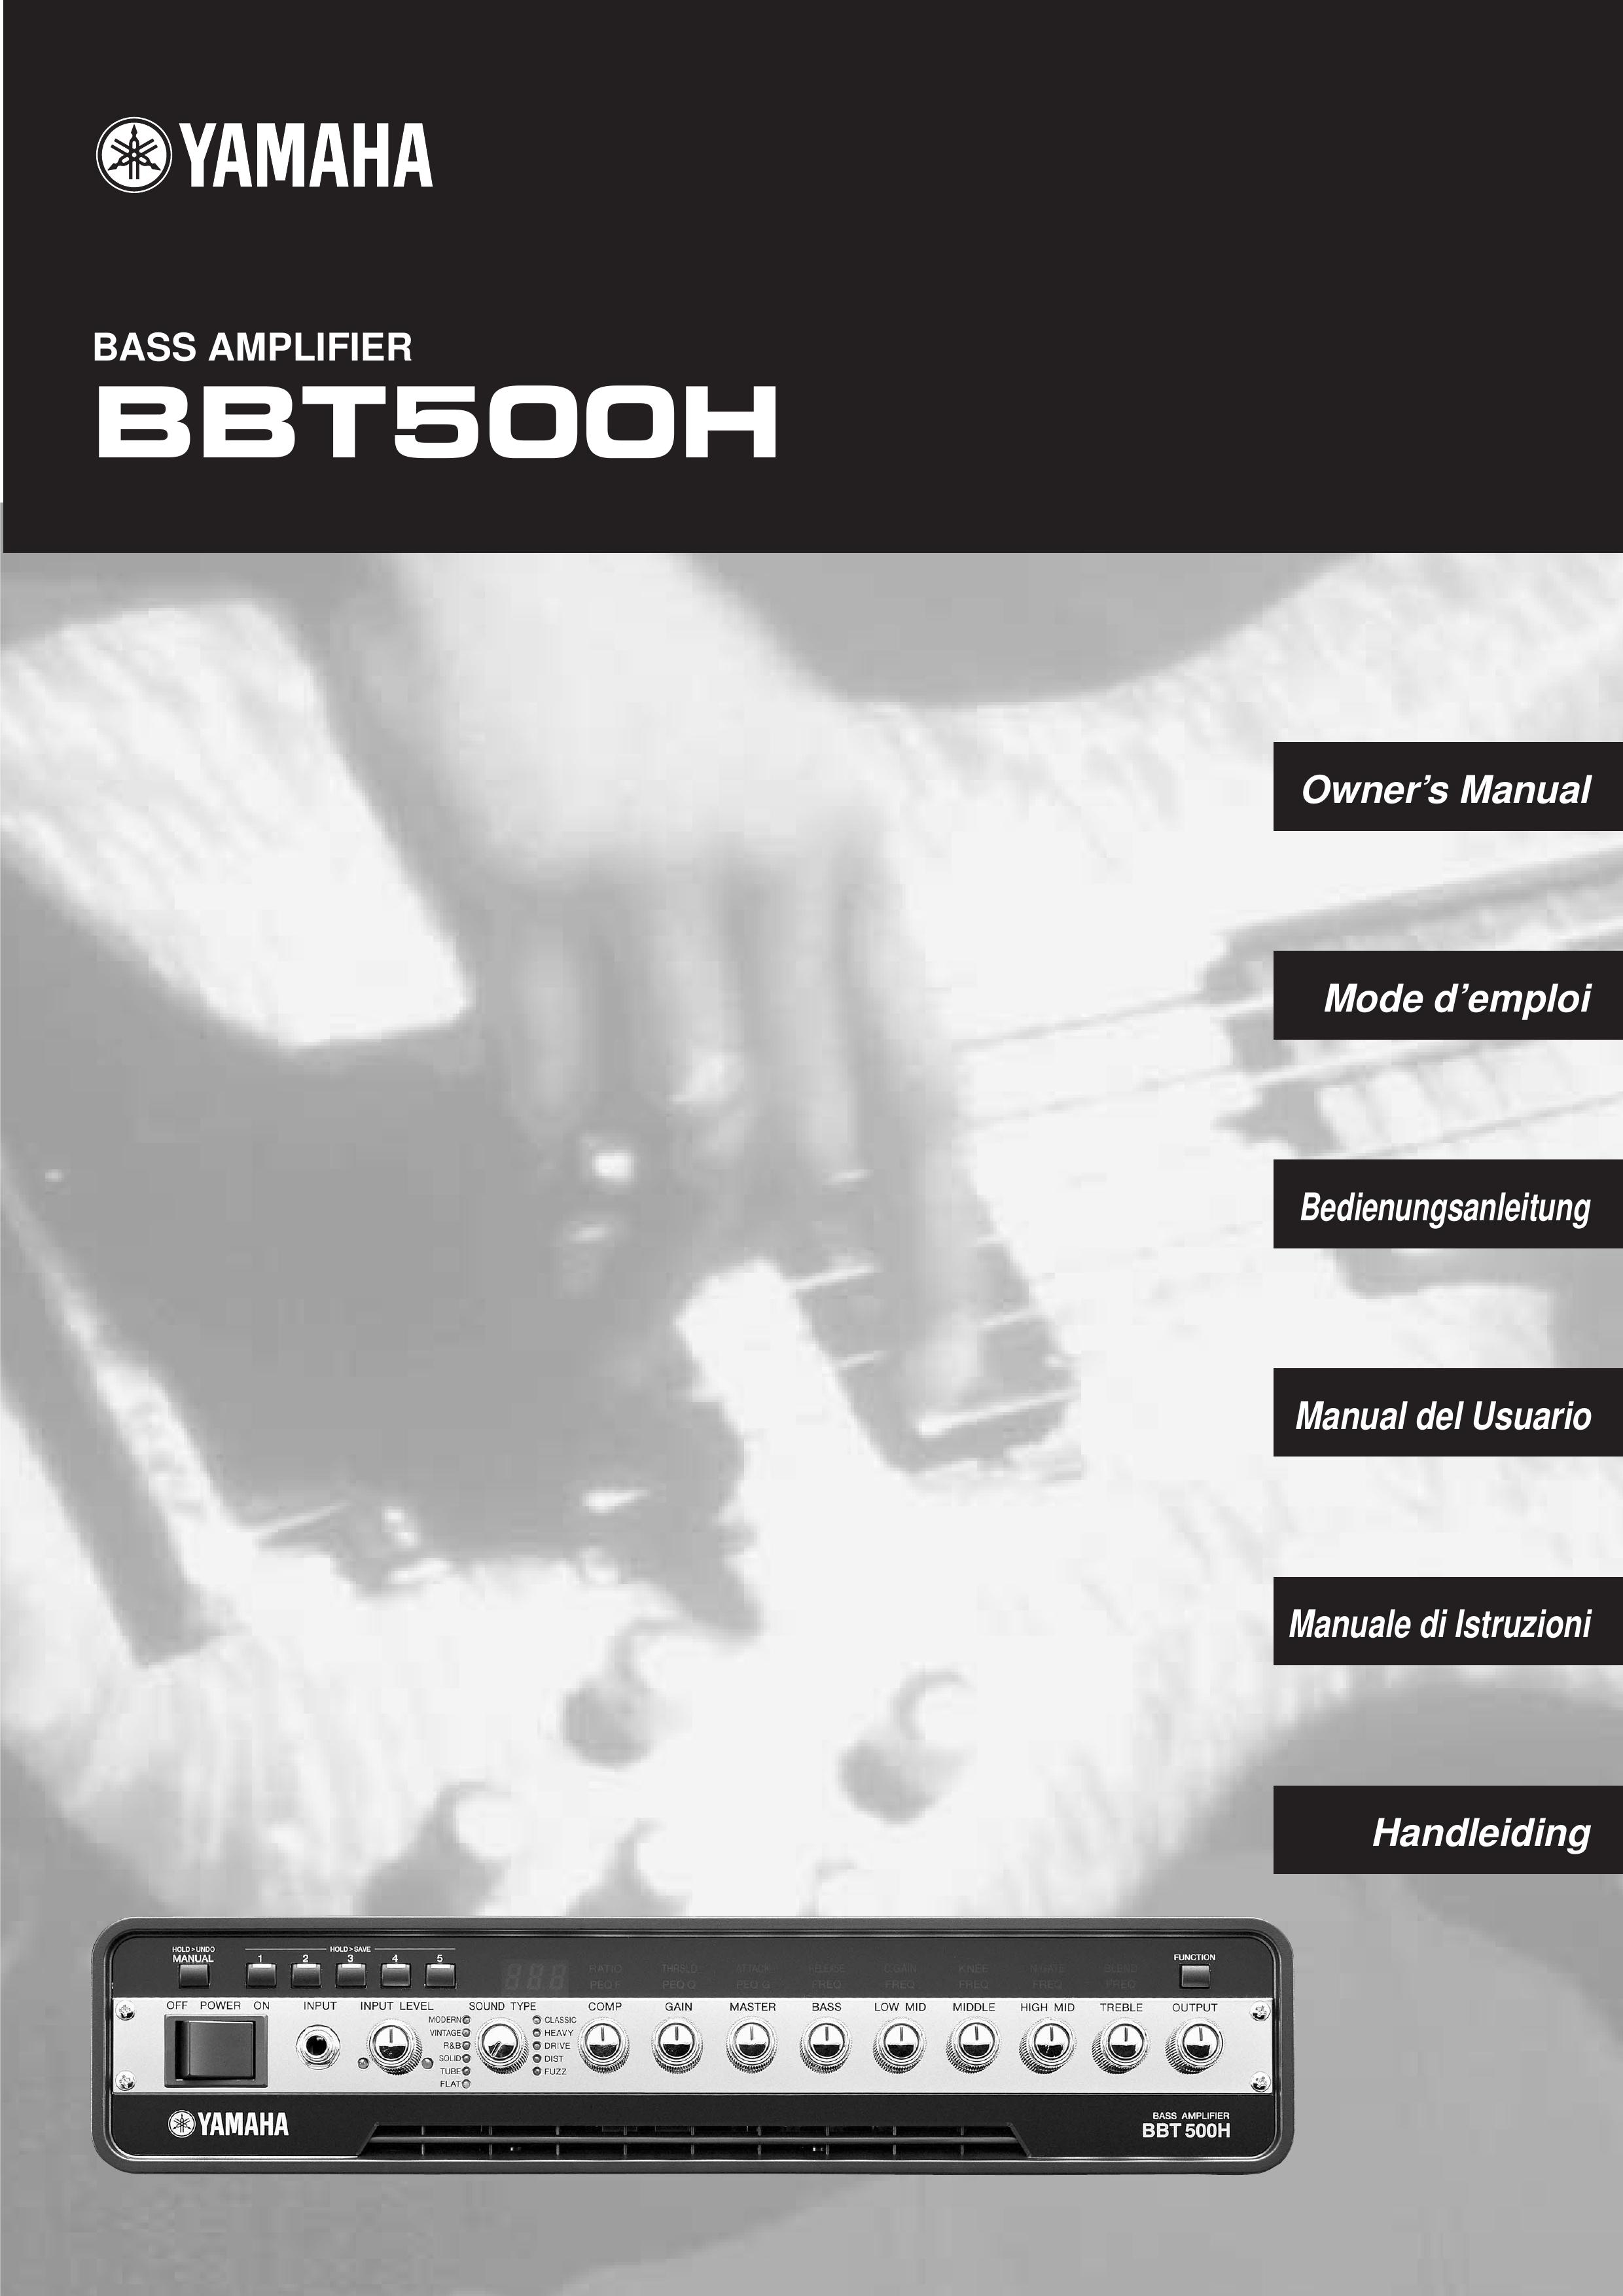 Yamaha BBT500H Musical Instrument Amplifier User Manual